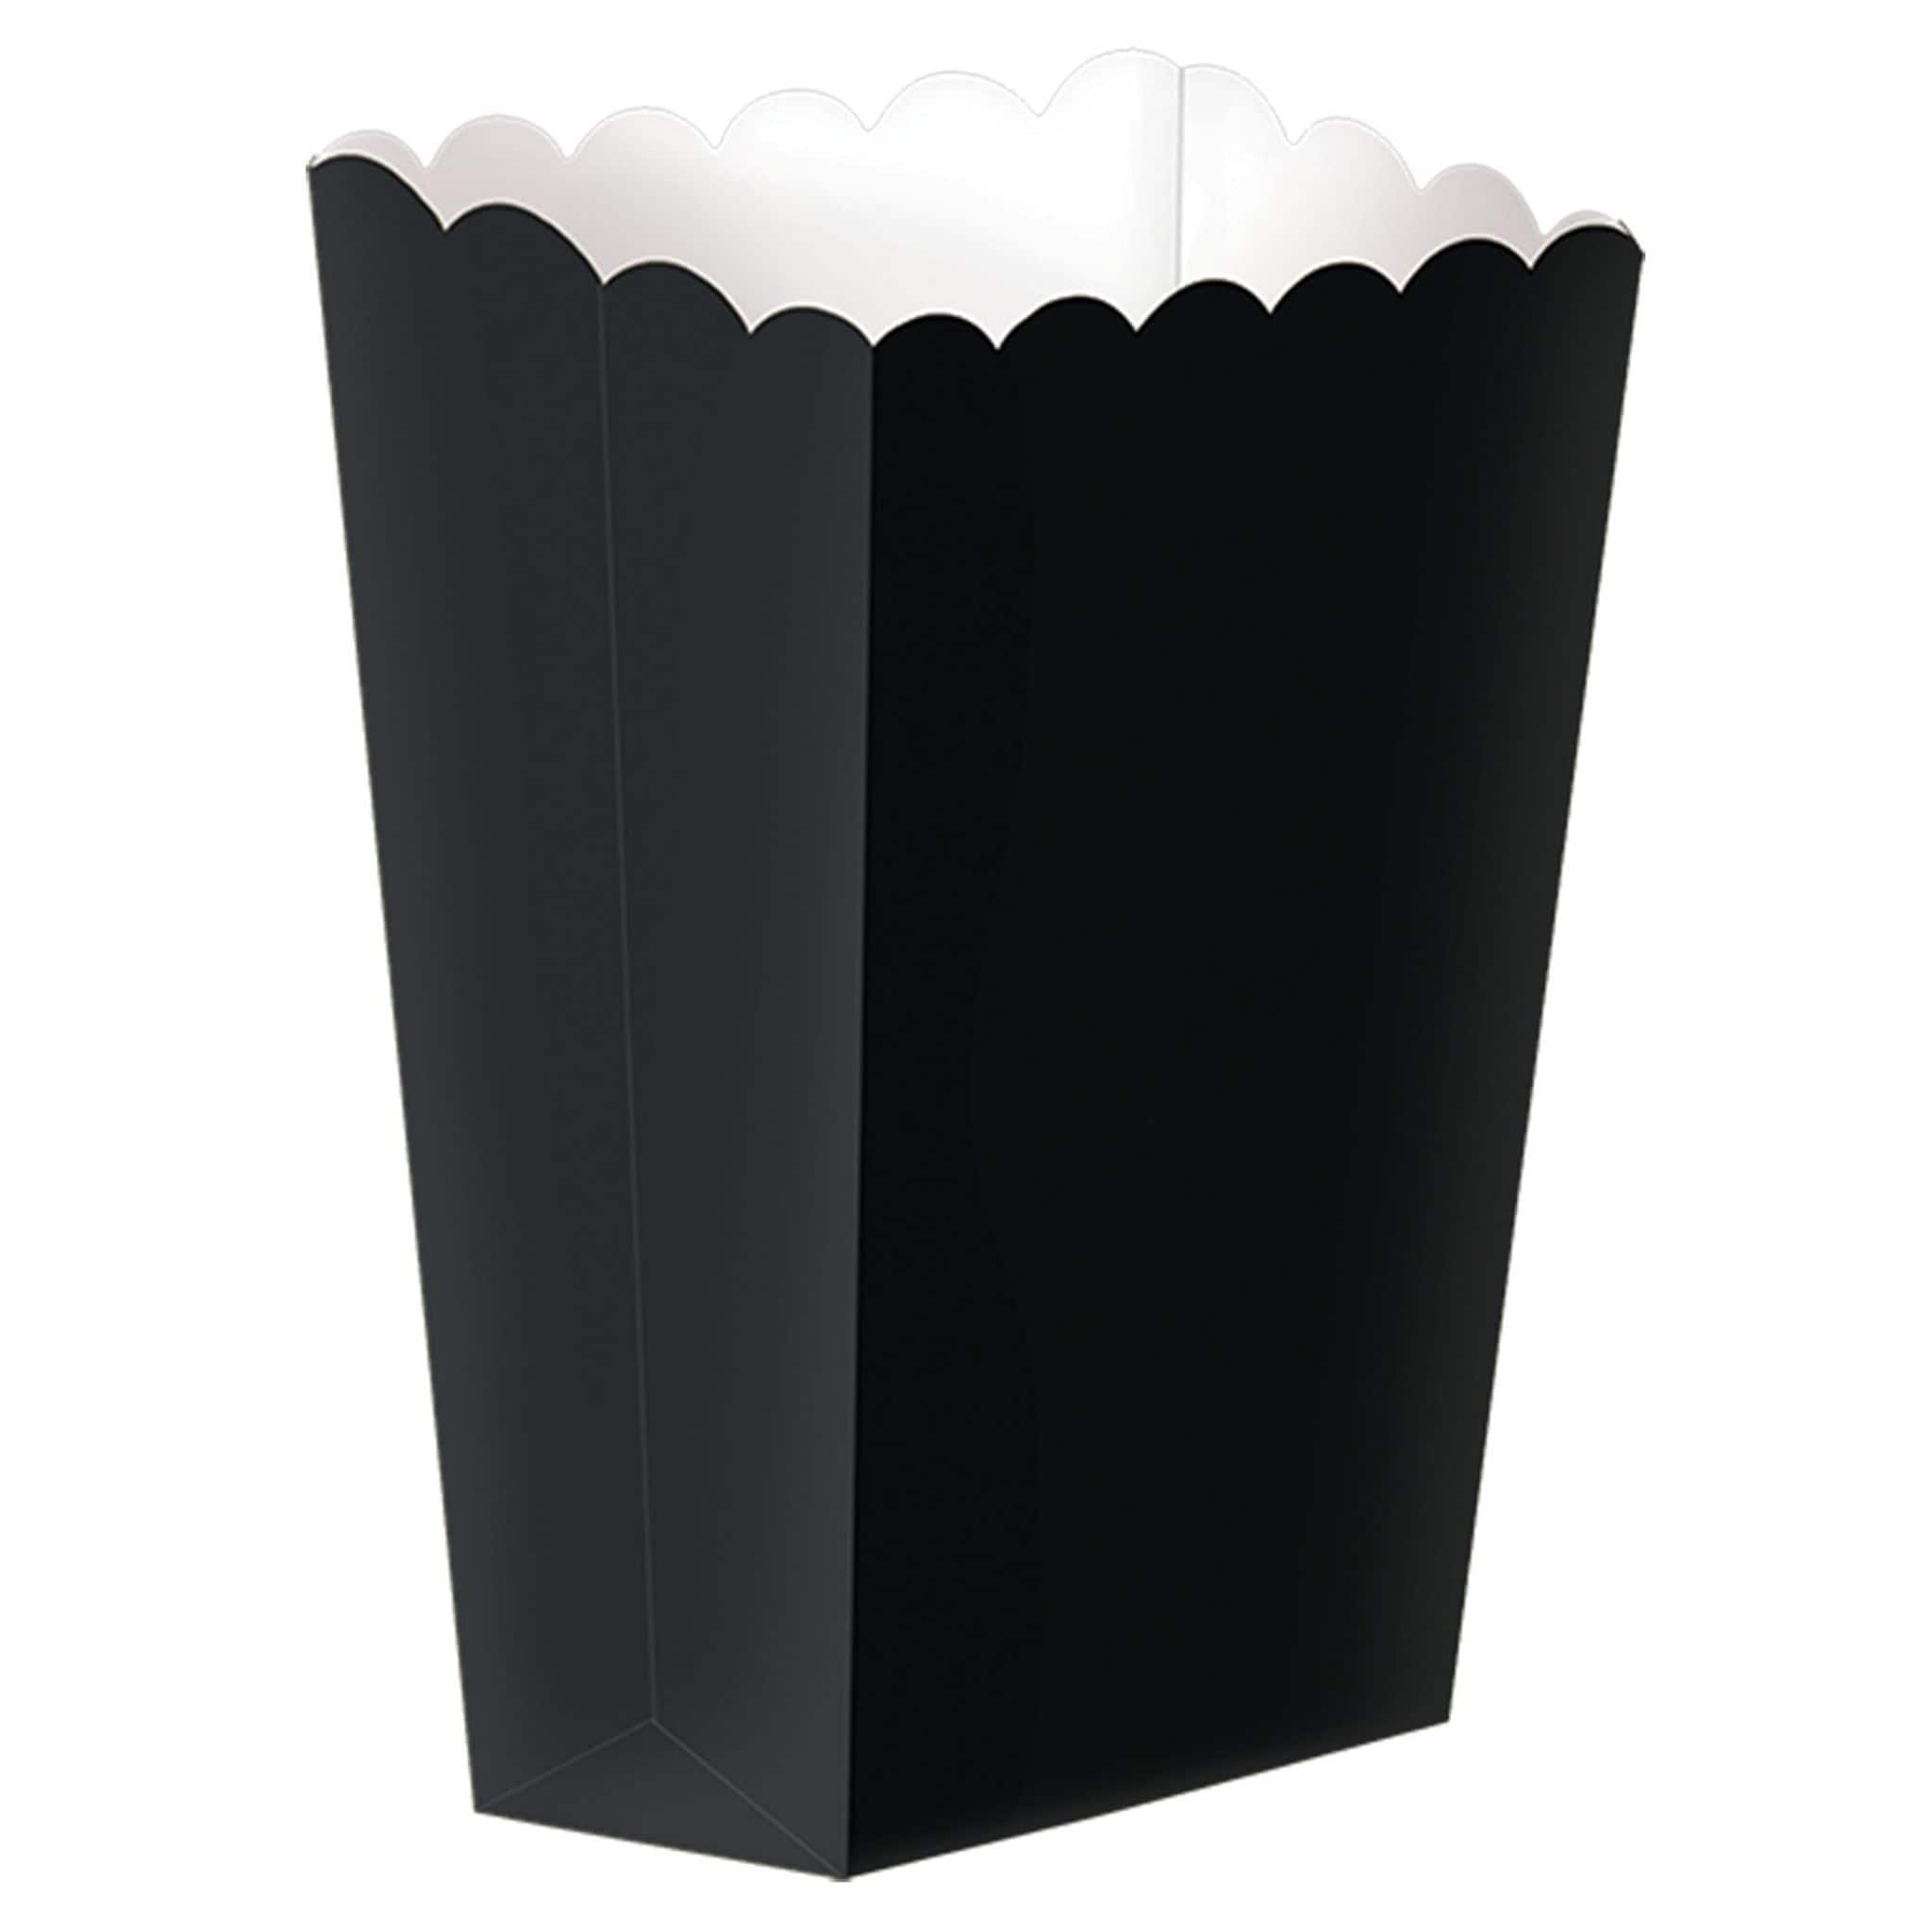 5.25" Paper Popcorn Boxes, 40ct.